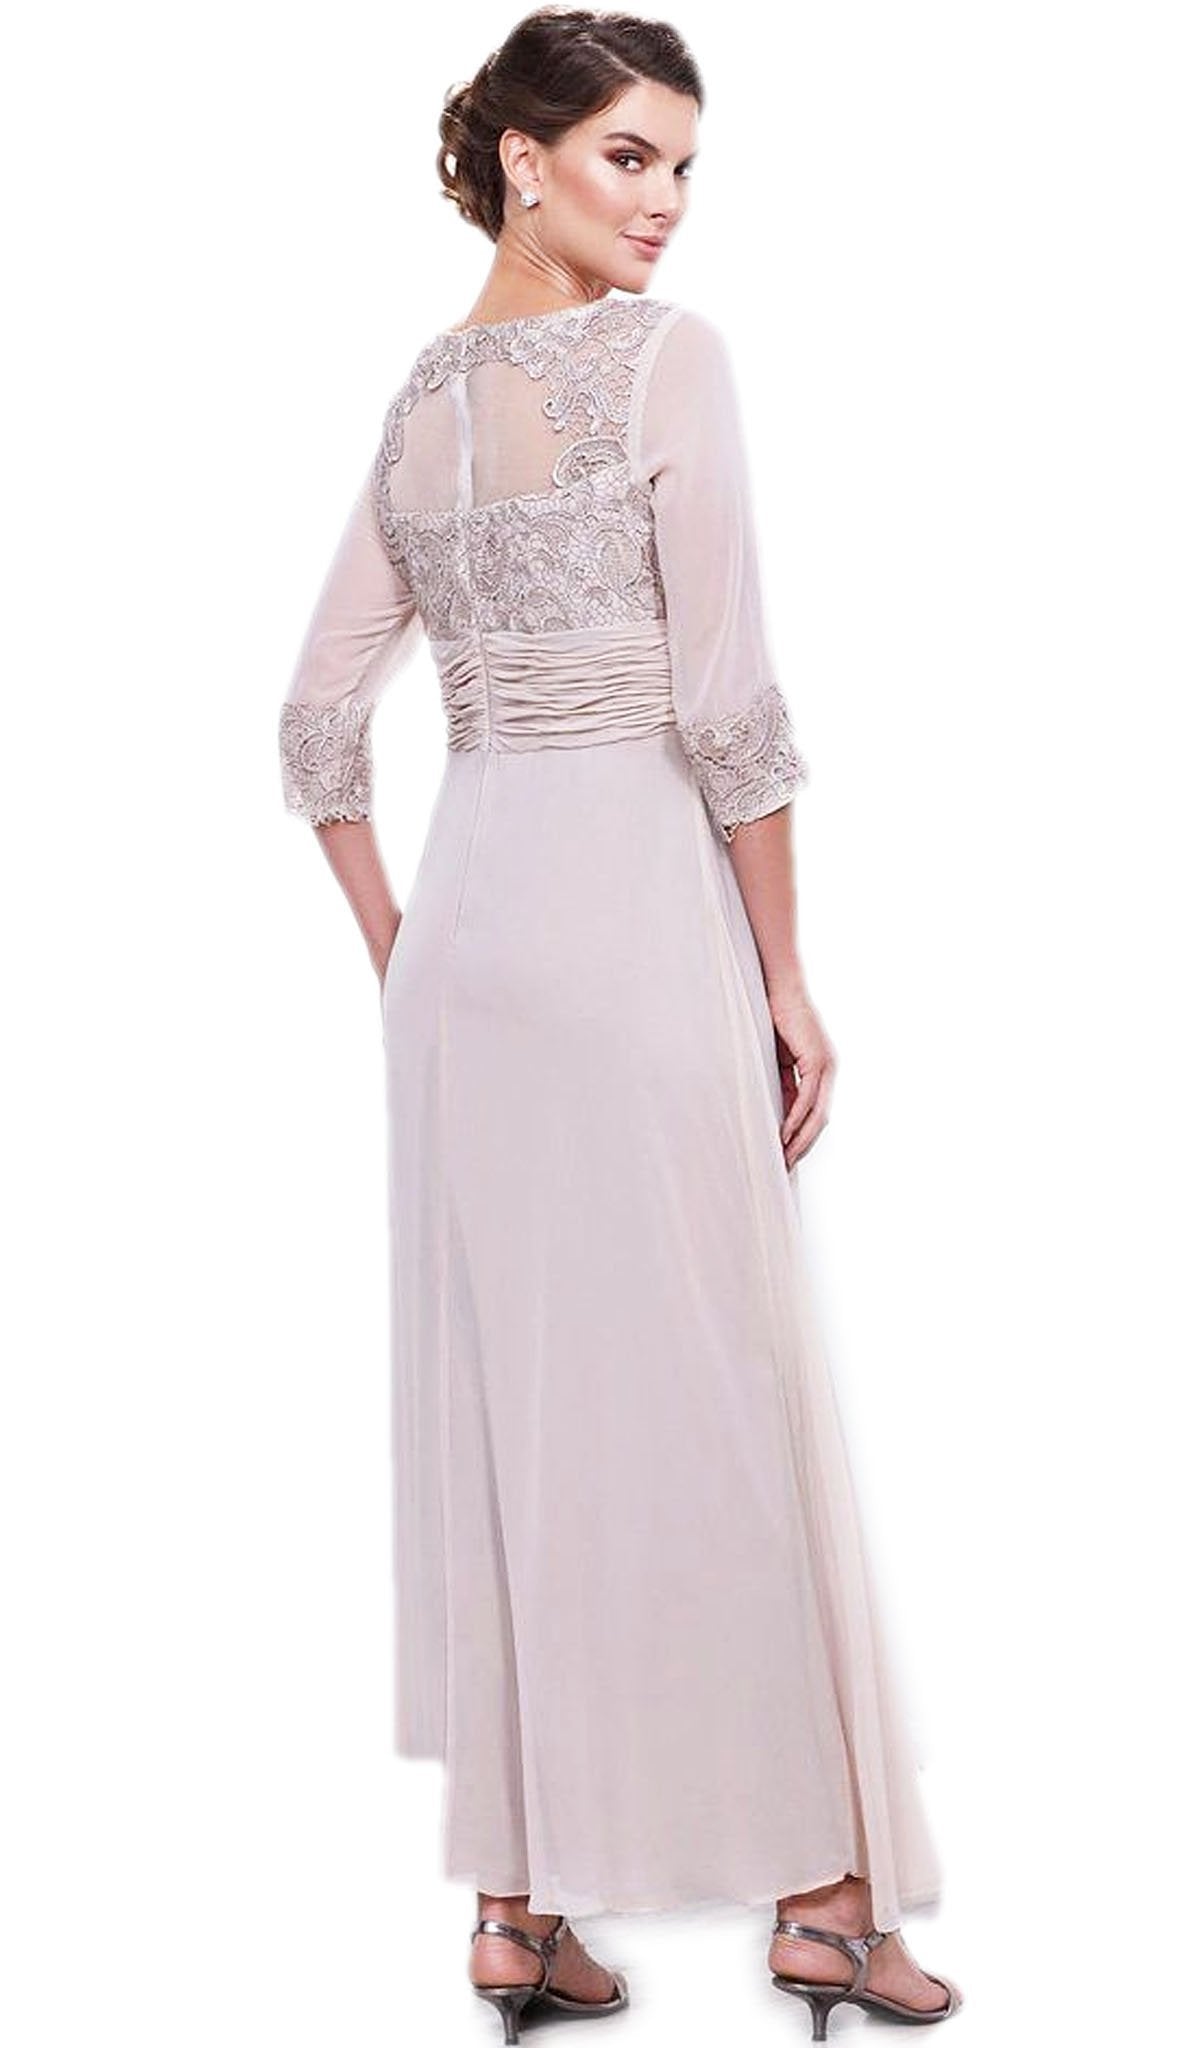 Nox Anabel - 5101 Quarter Length Sleeve Empire Long Formal Dress Mother of the Bride Dresses